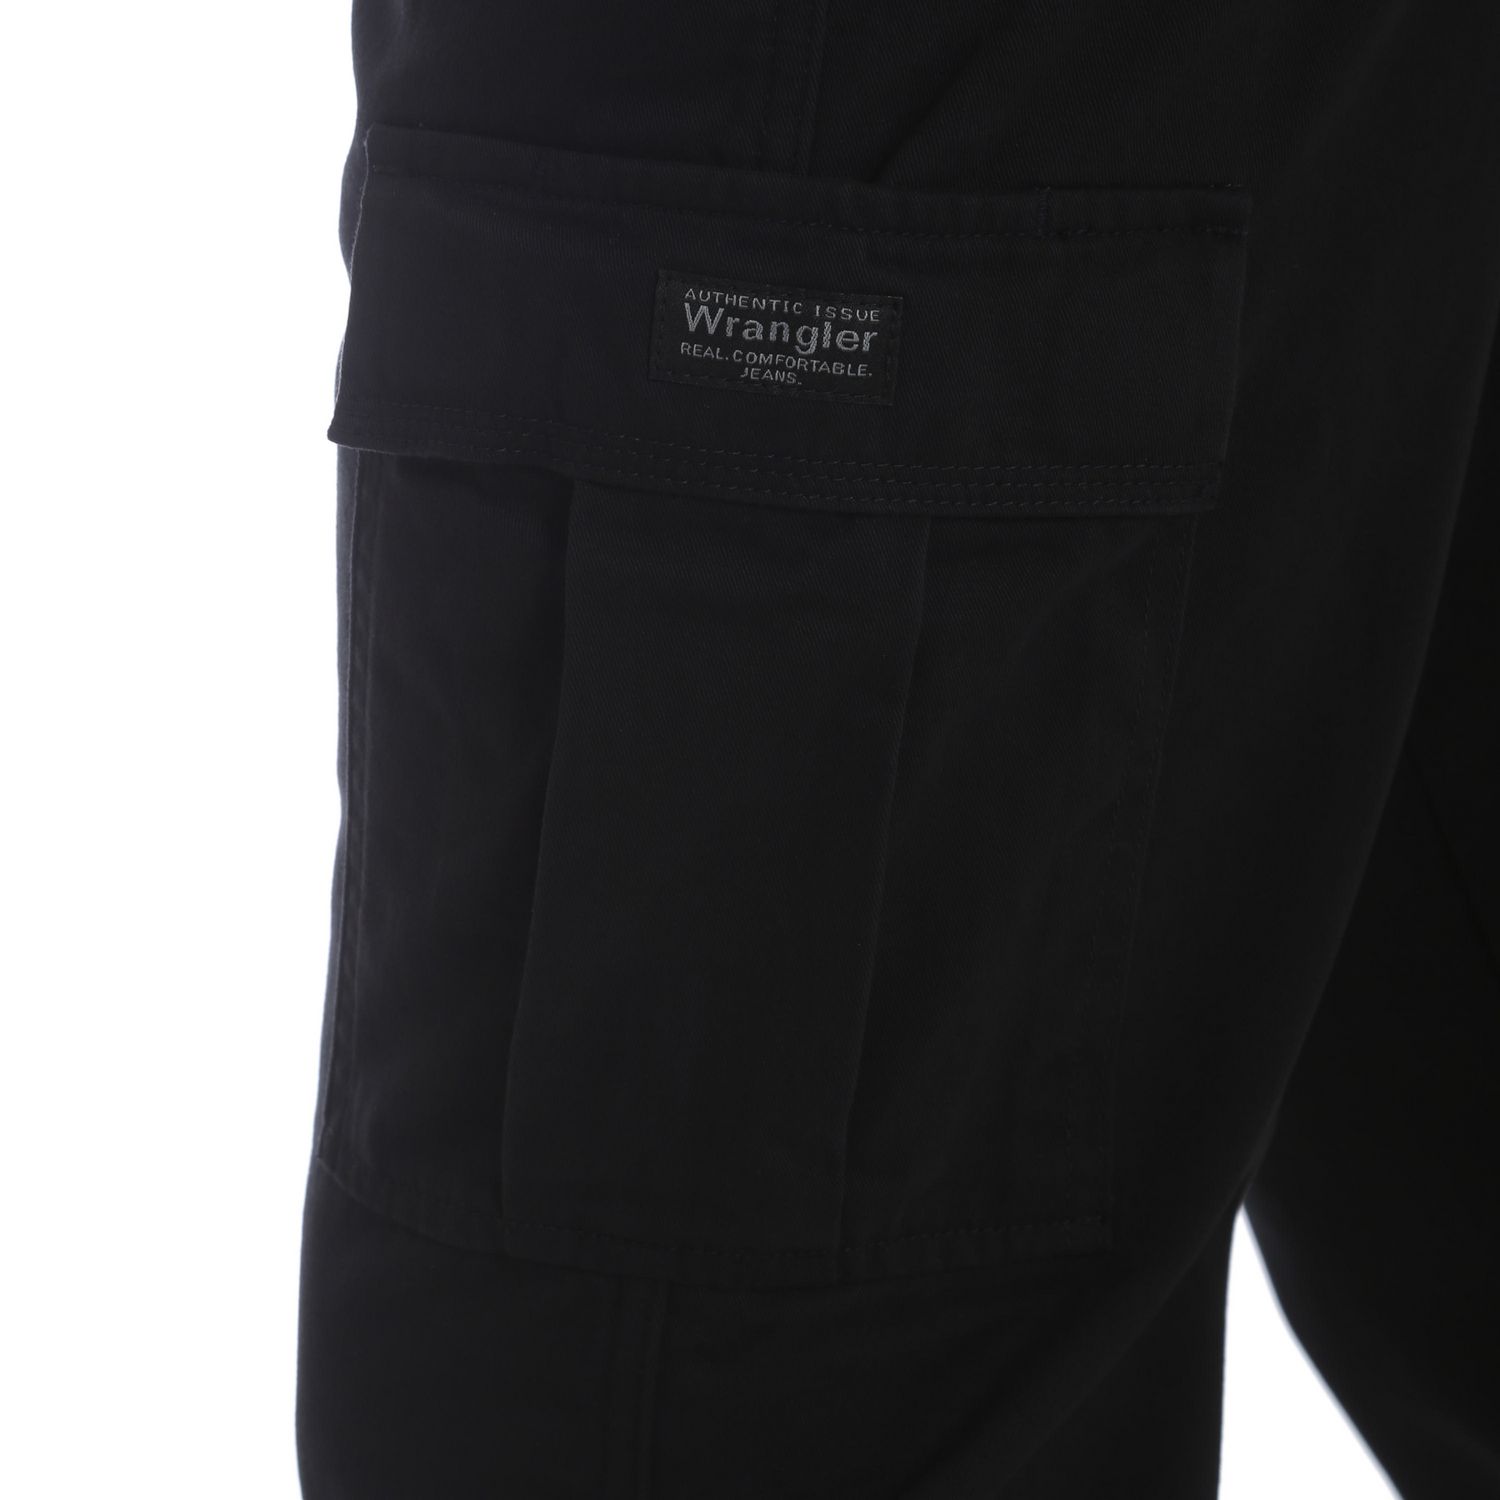 Wrangler All Terrain Gear Pants Mens 36 x 30 Black Fleece Lined ATG New -  Deblu